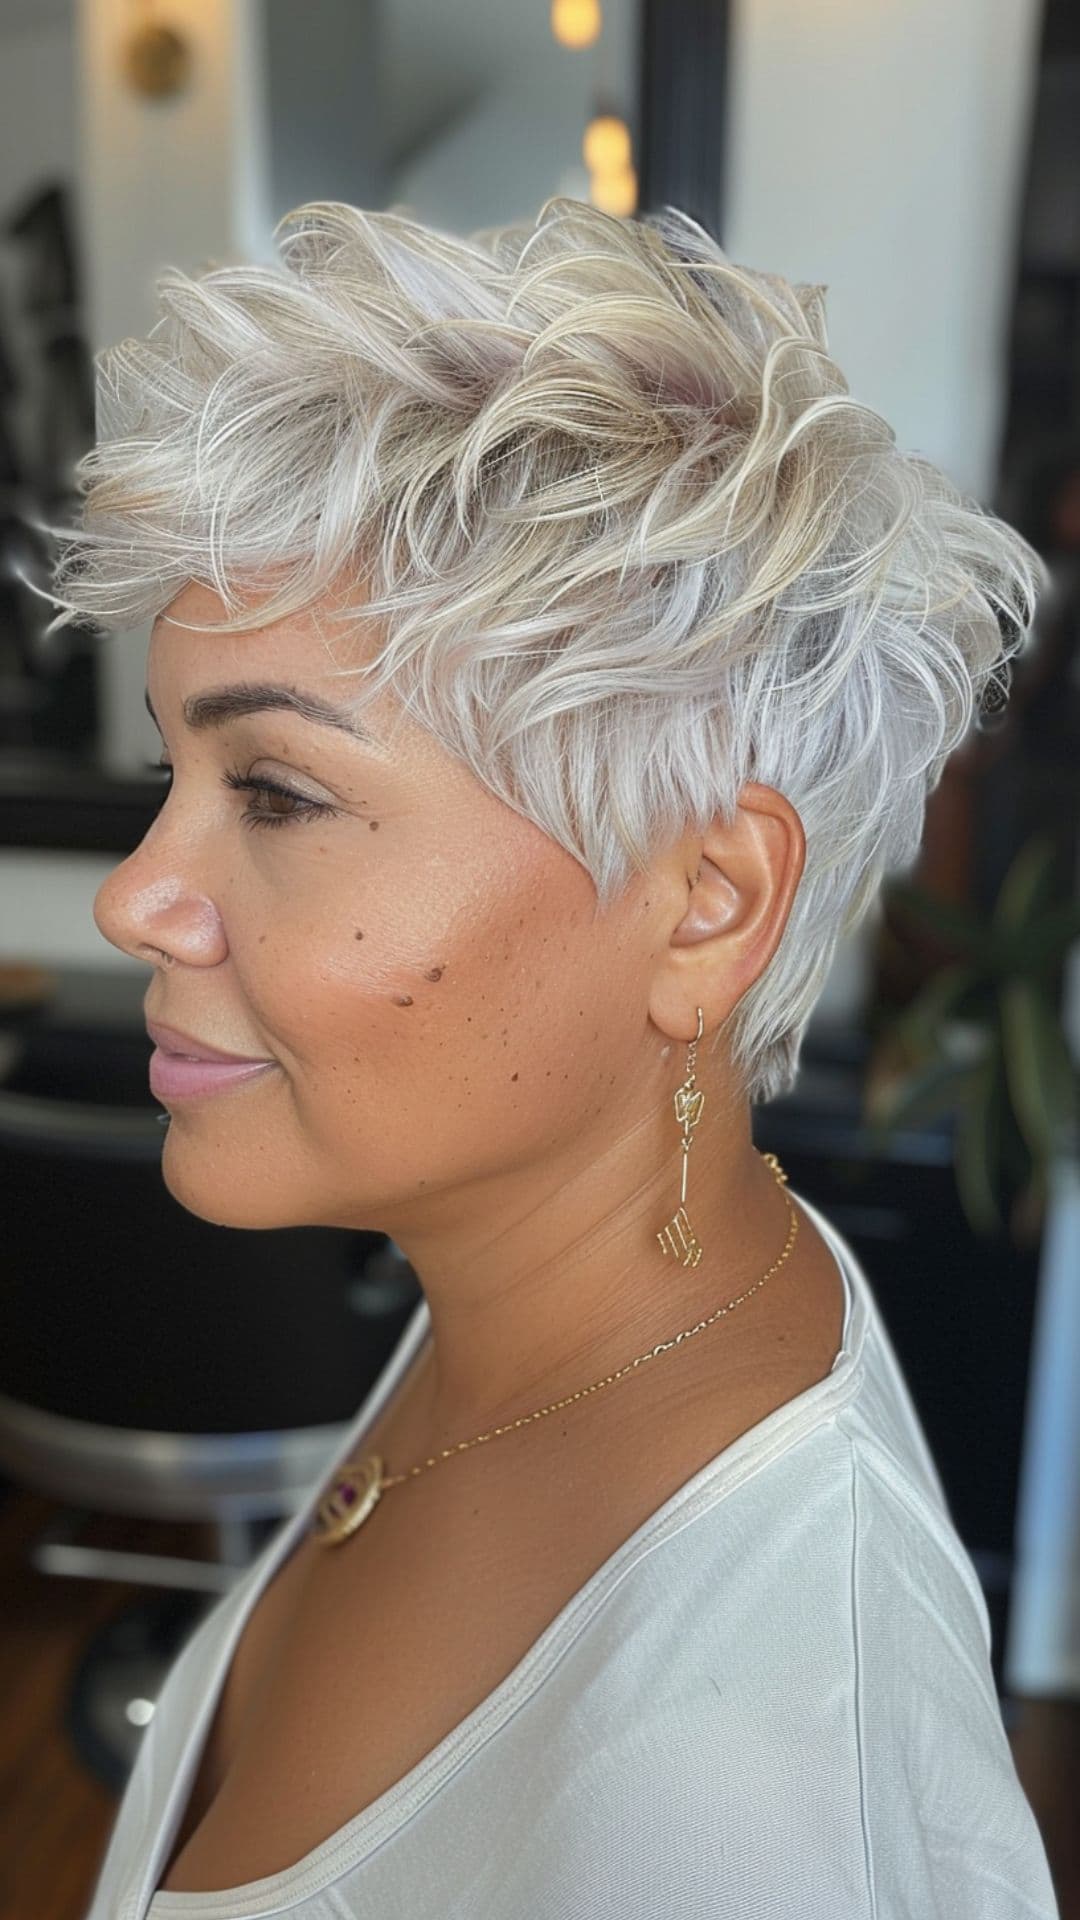 A woman modelling a short platinum blonde hair.